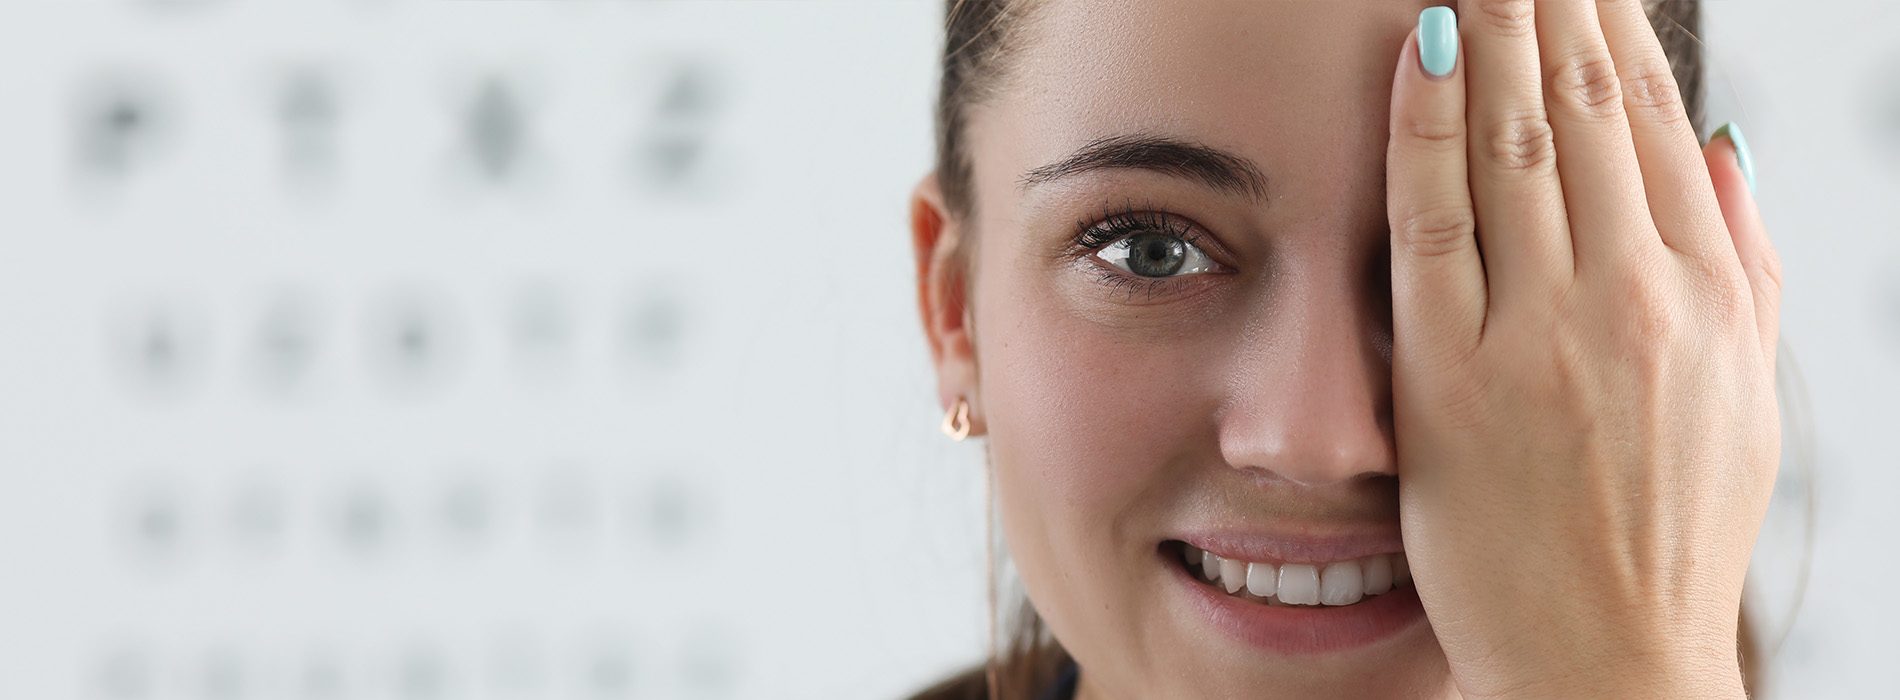 Optometry Store  Dr. Tania Stevens | Optical Lenses, Emergency Walk-in and Eye Exams